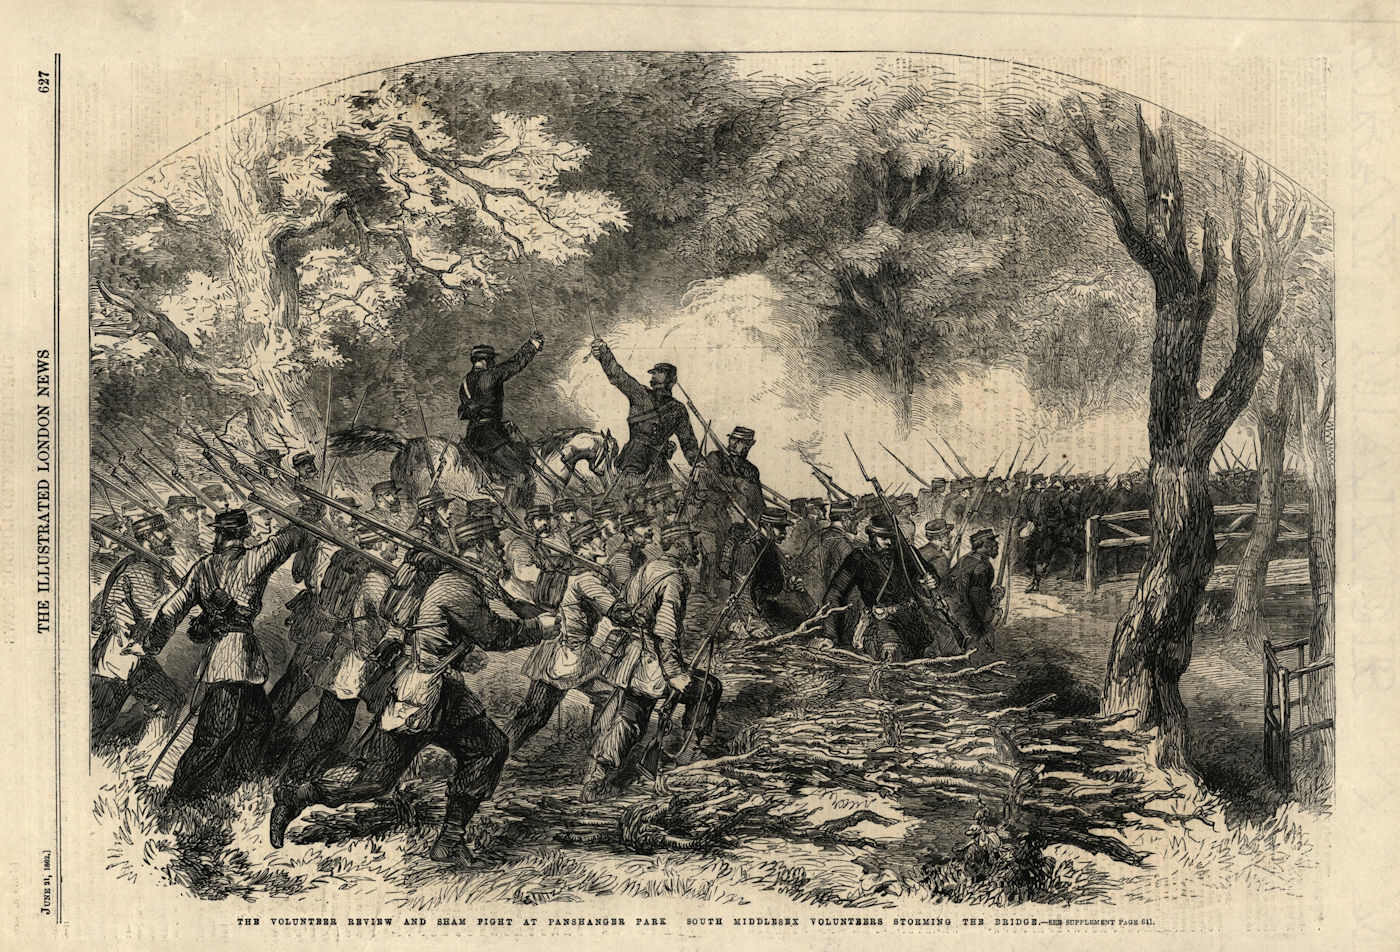 Panshanger Park manoeuvres. S. Middlesex Volunteers storm bridge. Hertford 1862